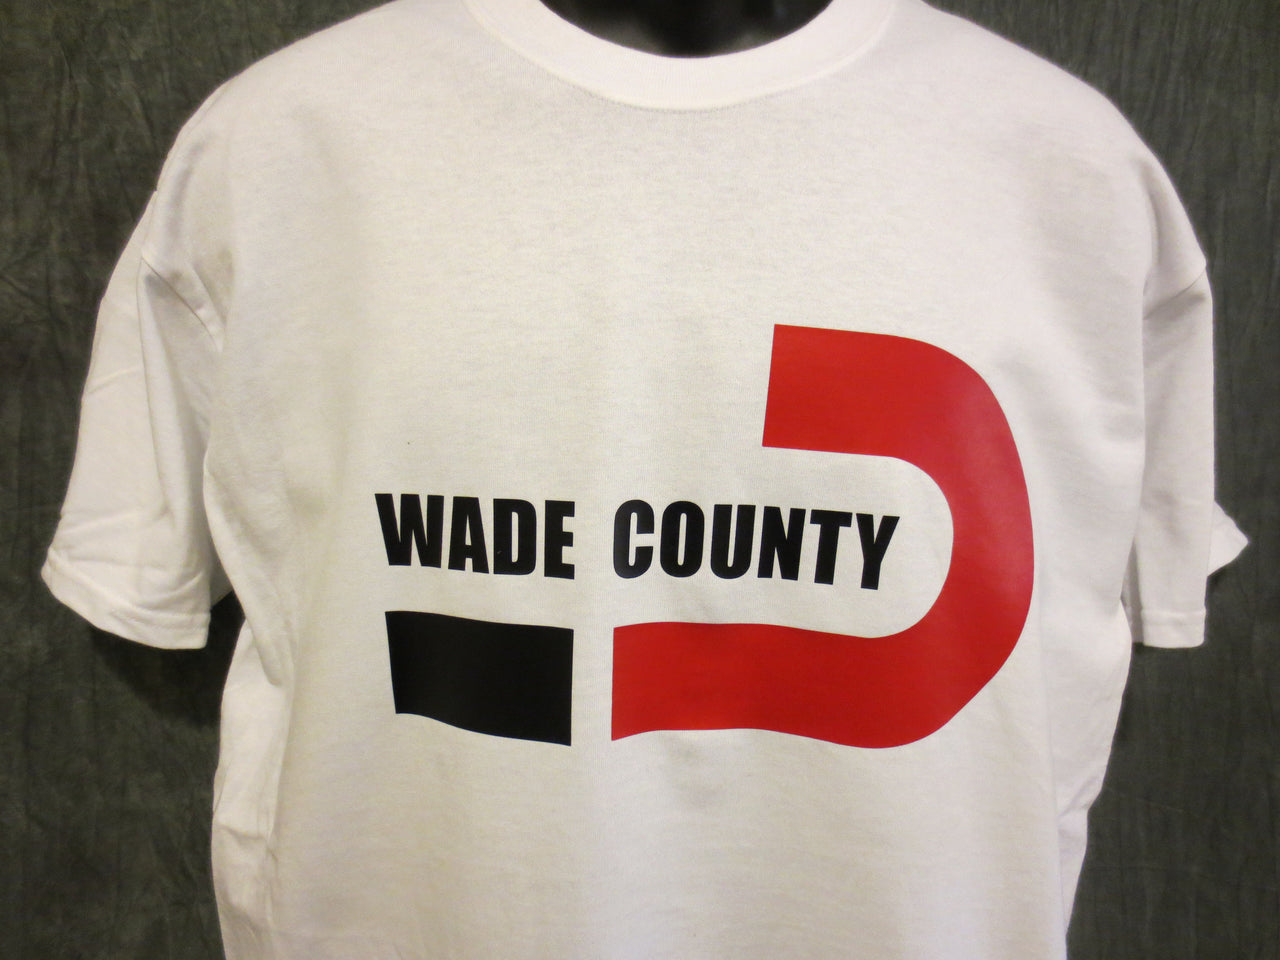 Miami Heat "Wade County" Dwyane Wade White Tshirt - TshirtNow.net - 2